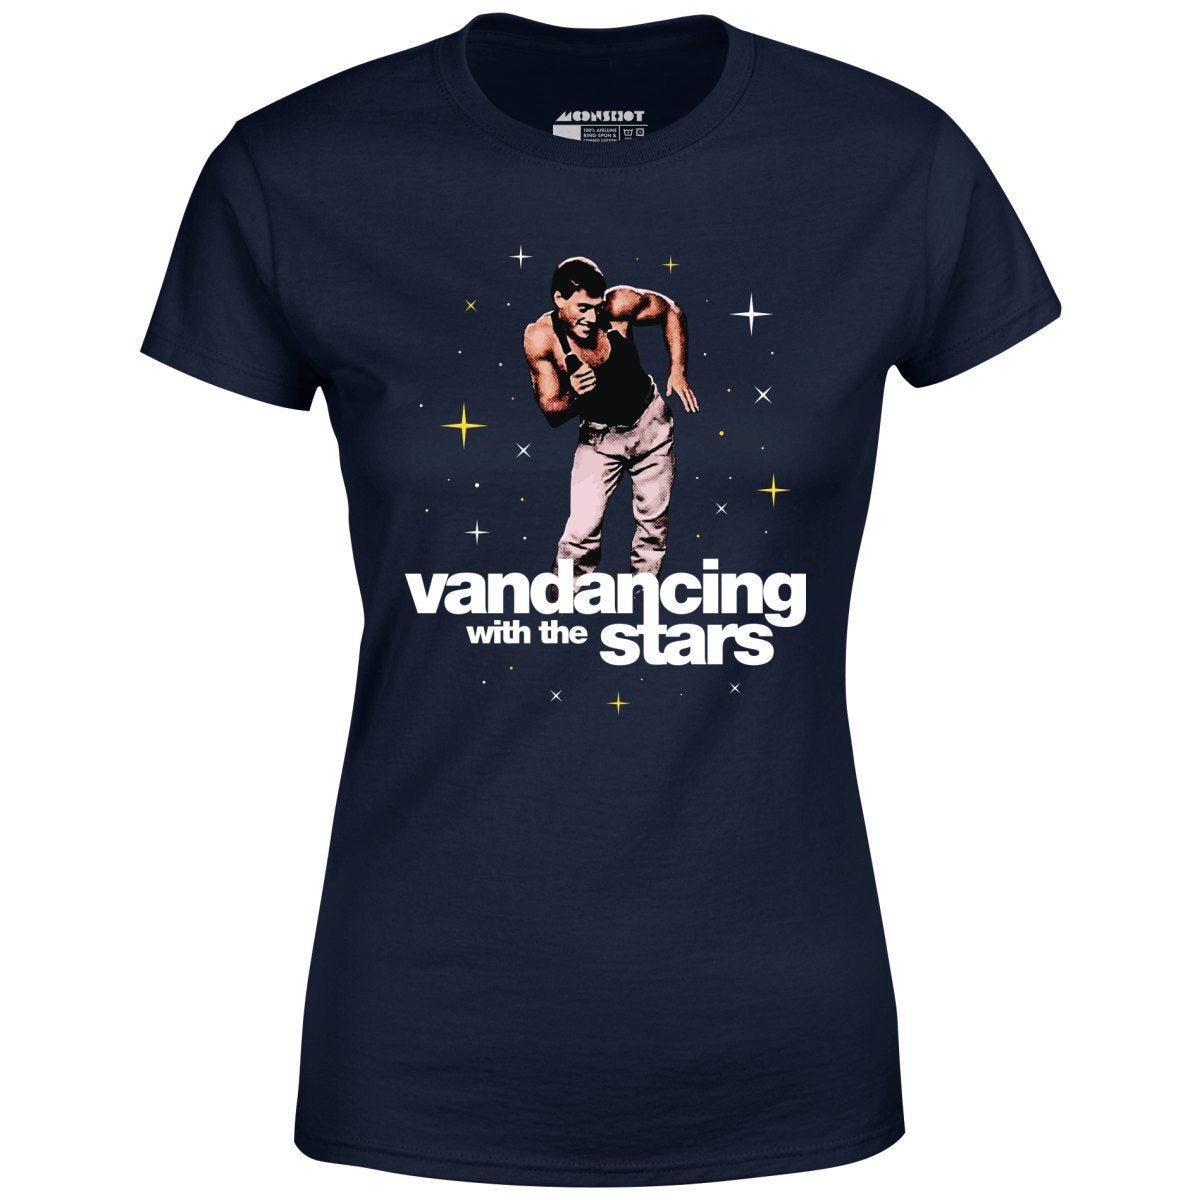 Vandancing With The Stars - Women's T-Shirt